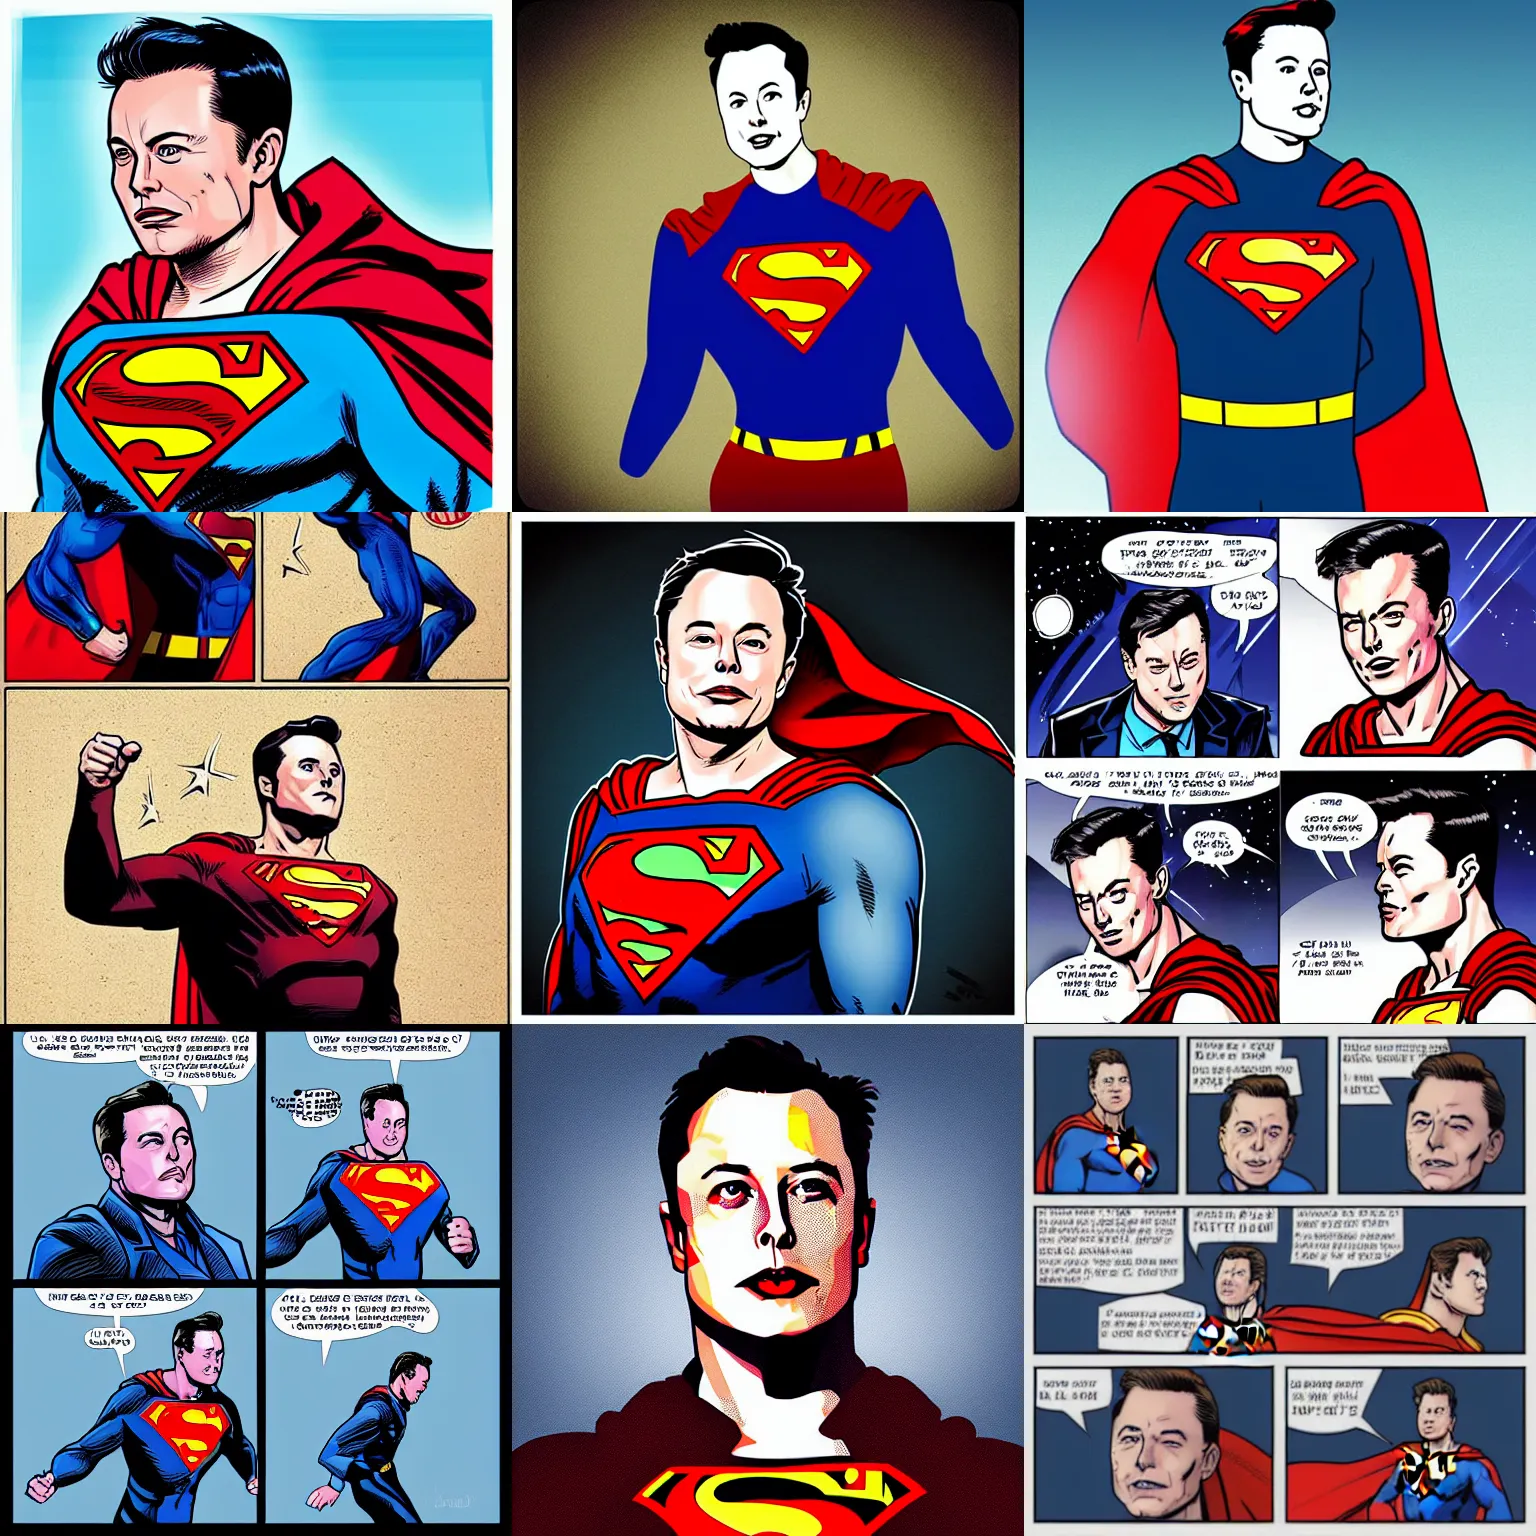 Prompt: “comic style Elon musk as Superman”